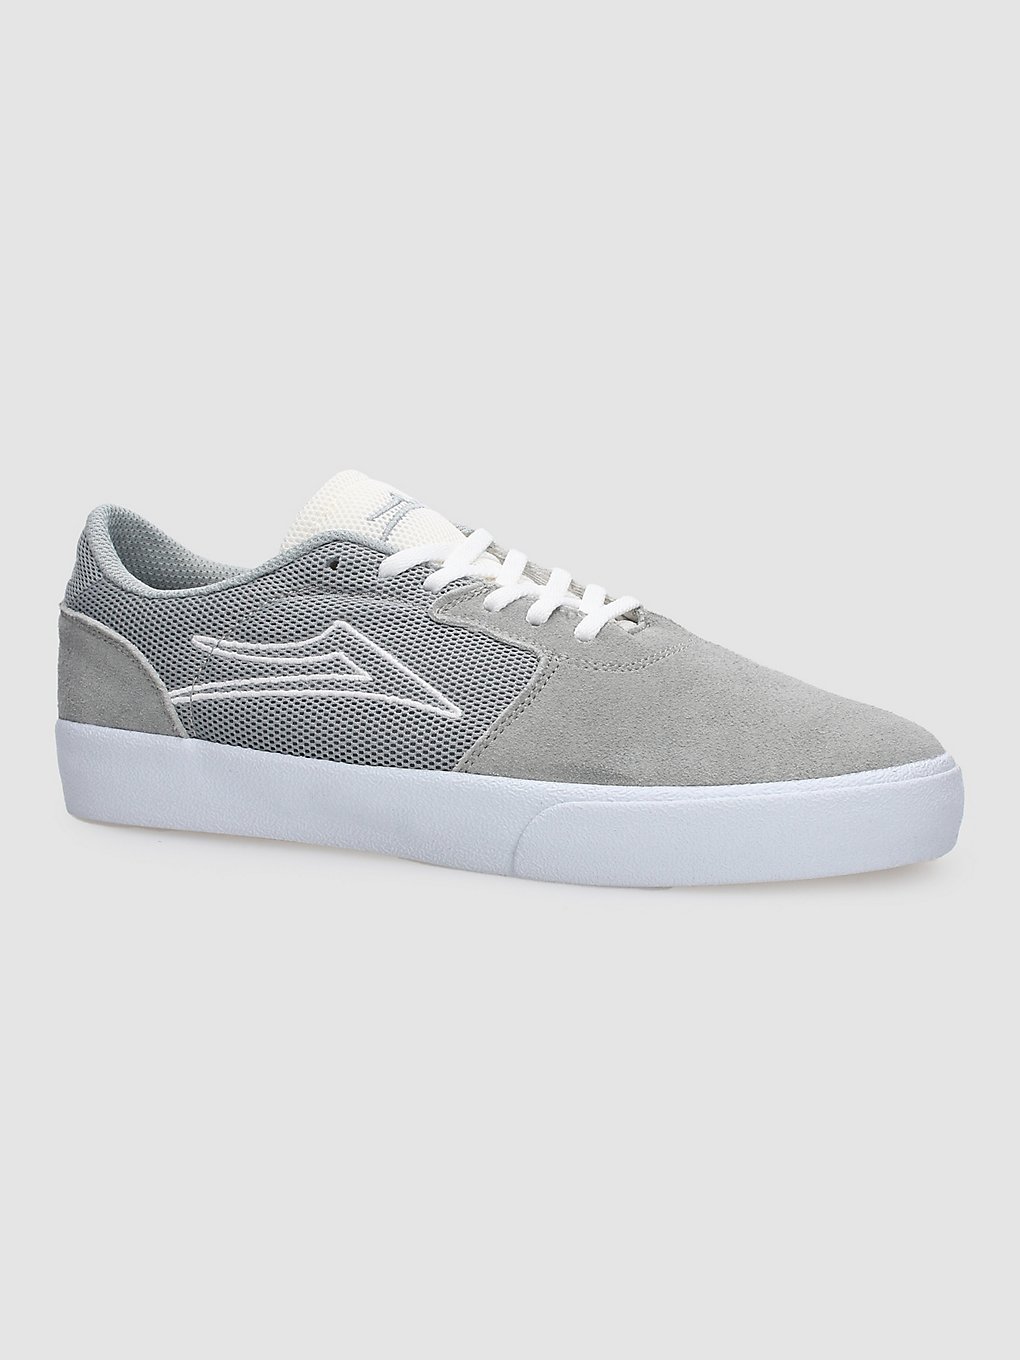 Lakai Cardiff Skate Shoes light grey suede kaufen